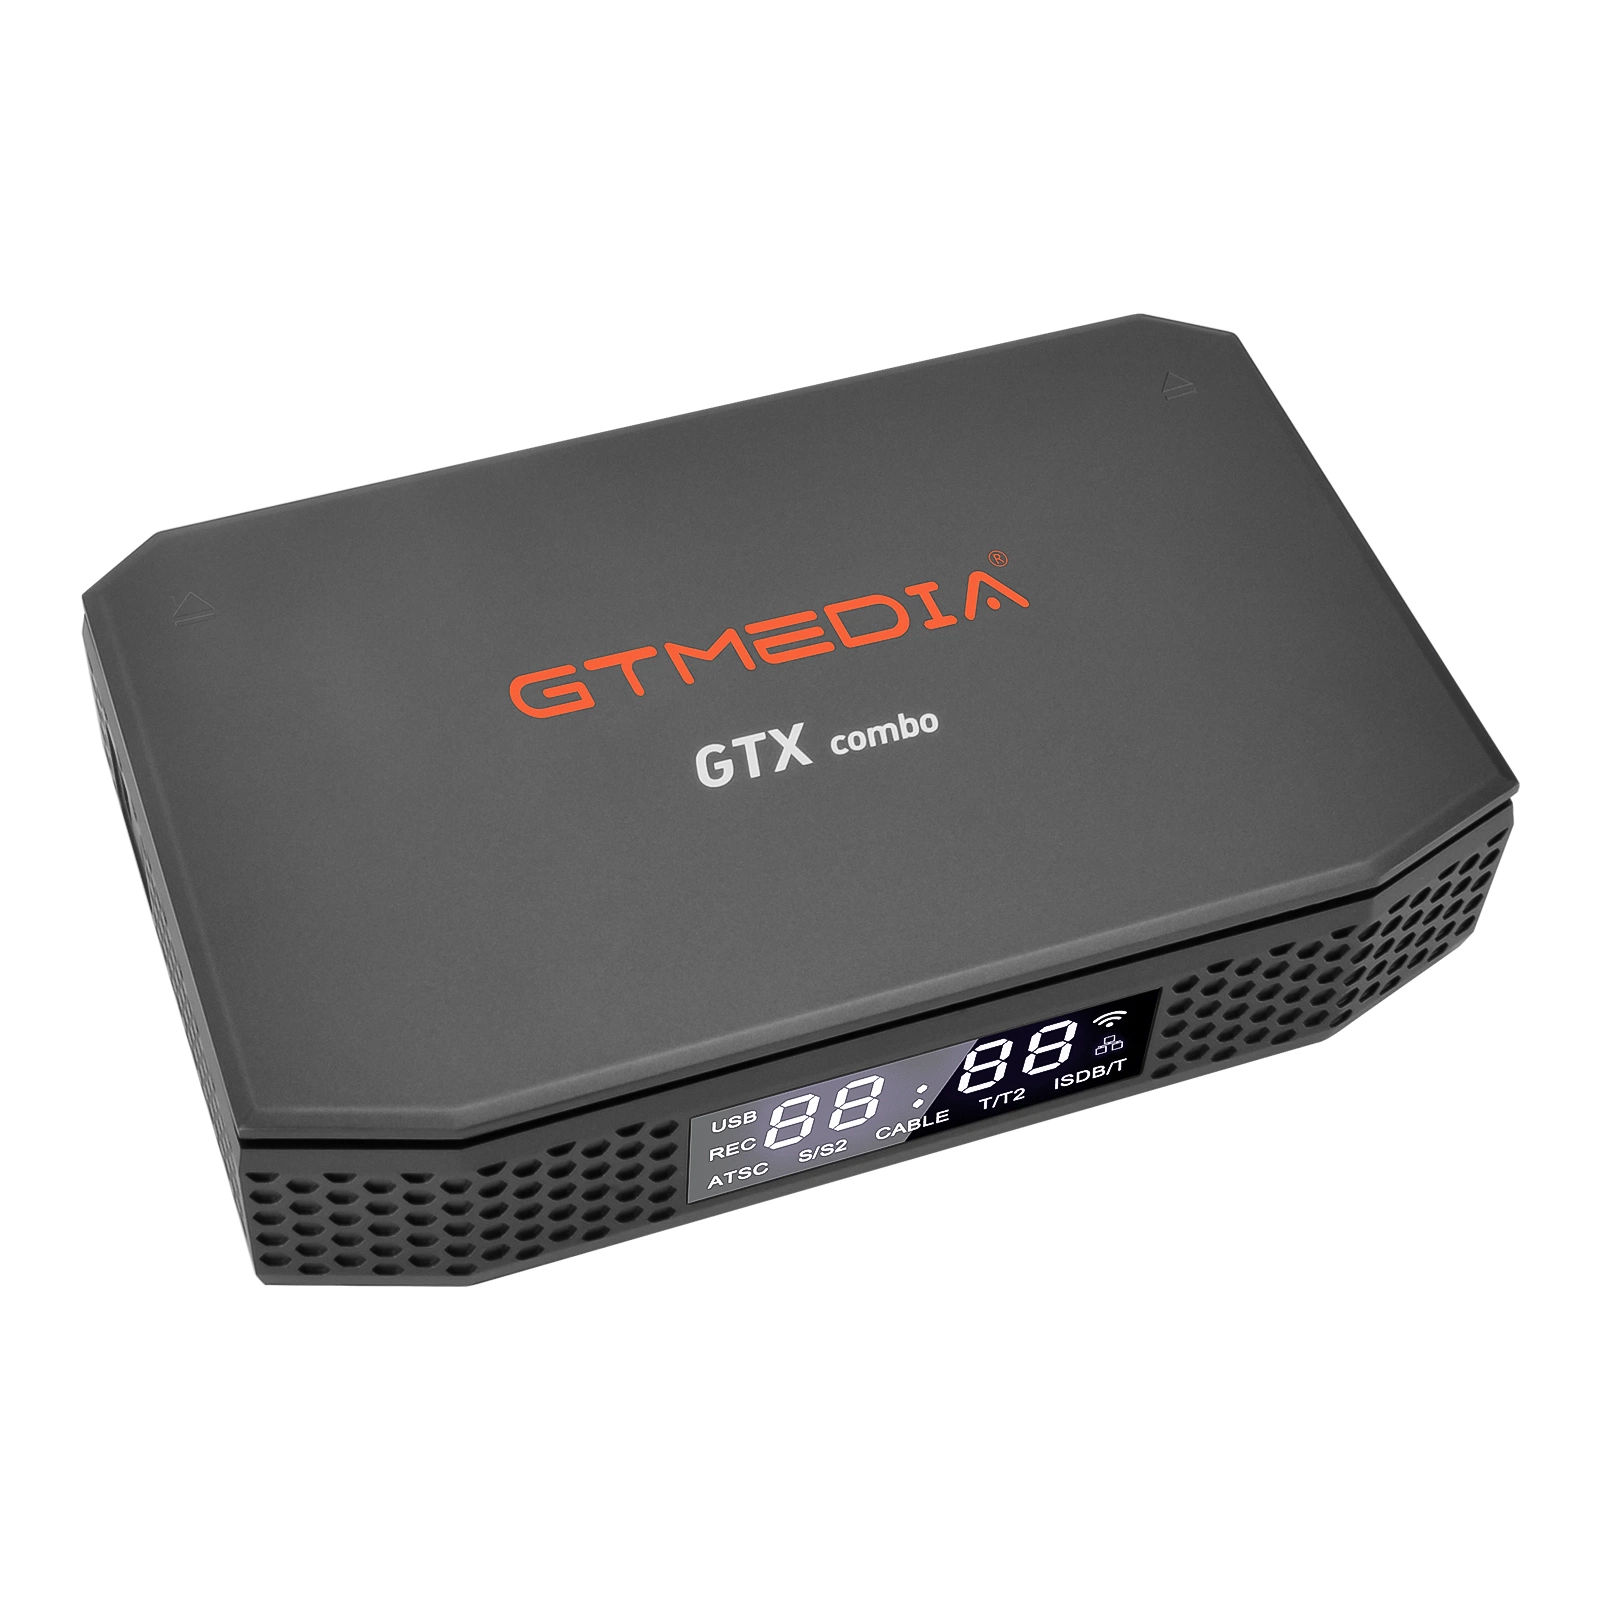 Gtmedia GTX Combo Satellite Receiver DVB Broadcasting Support 8K Ultra جهاز فك التشفير الرقمي HD IPTV مع Android 9.0